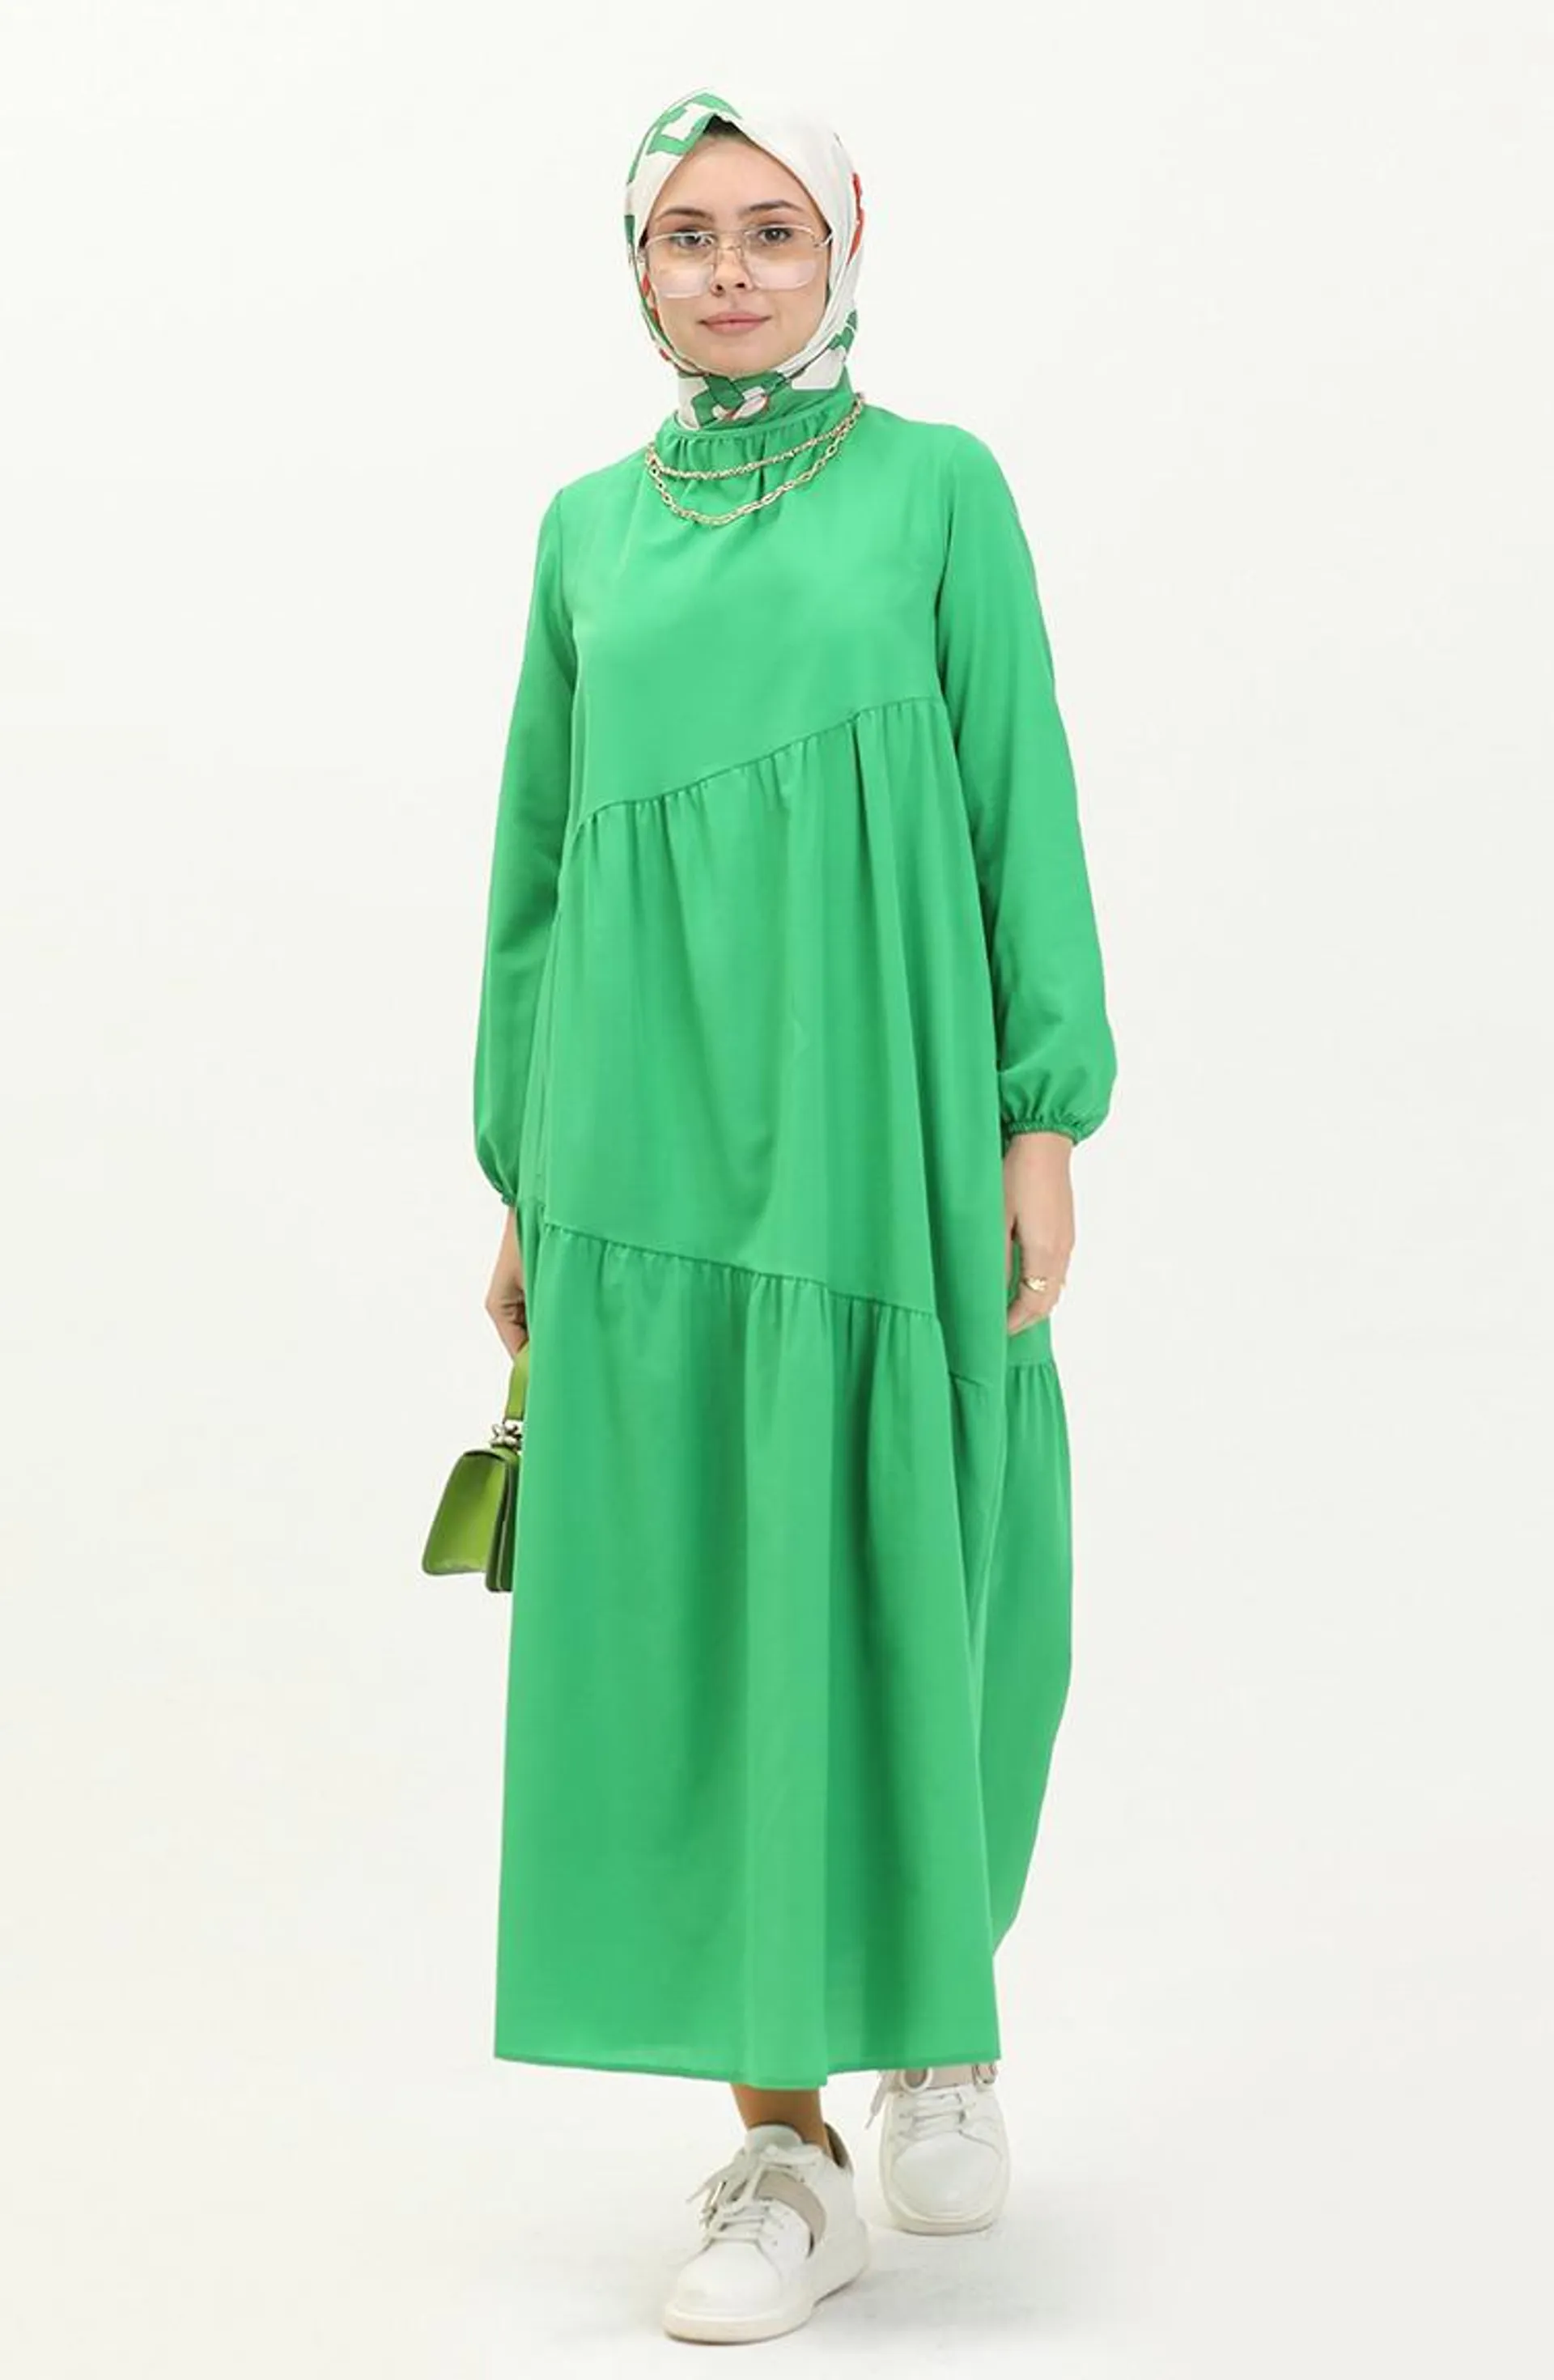 Ruffle Detail Dress 2035-03 Green 2035-03